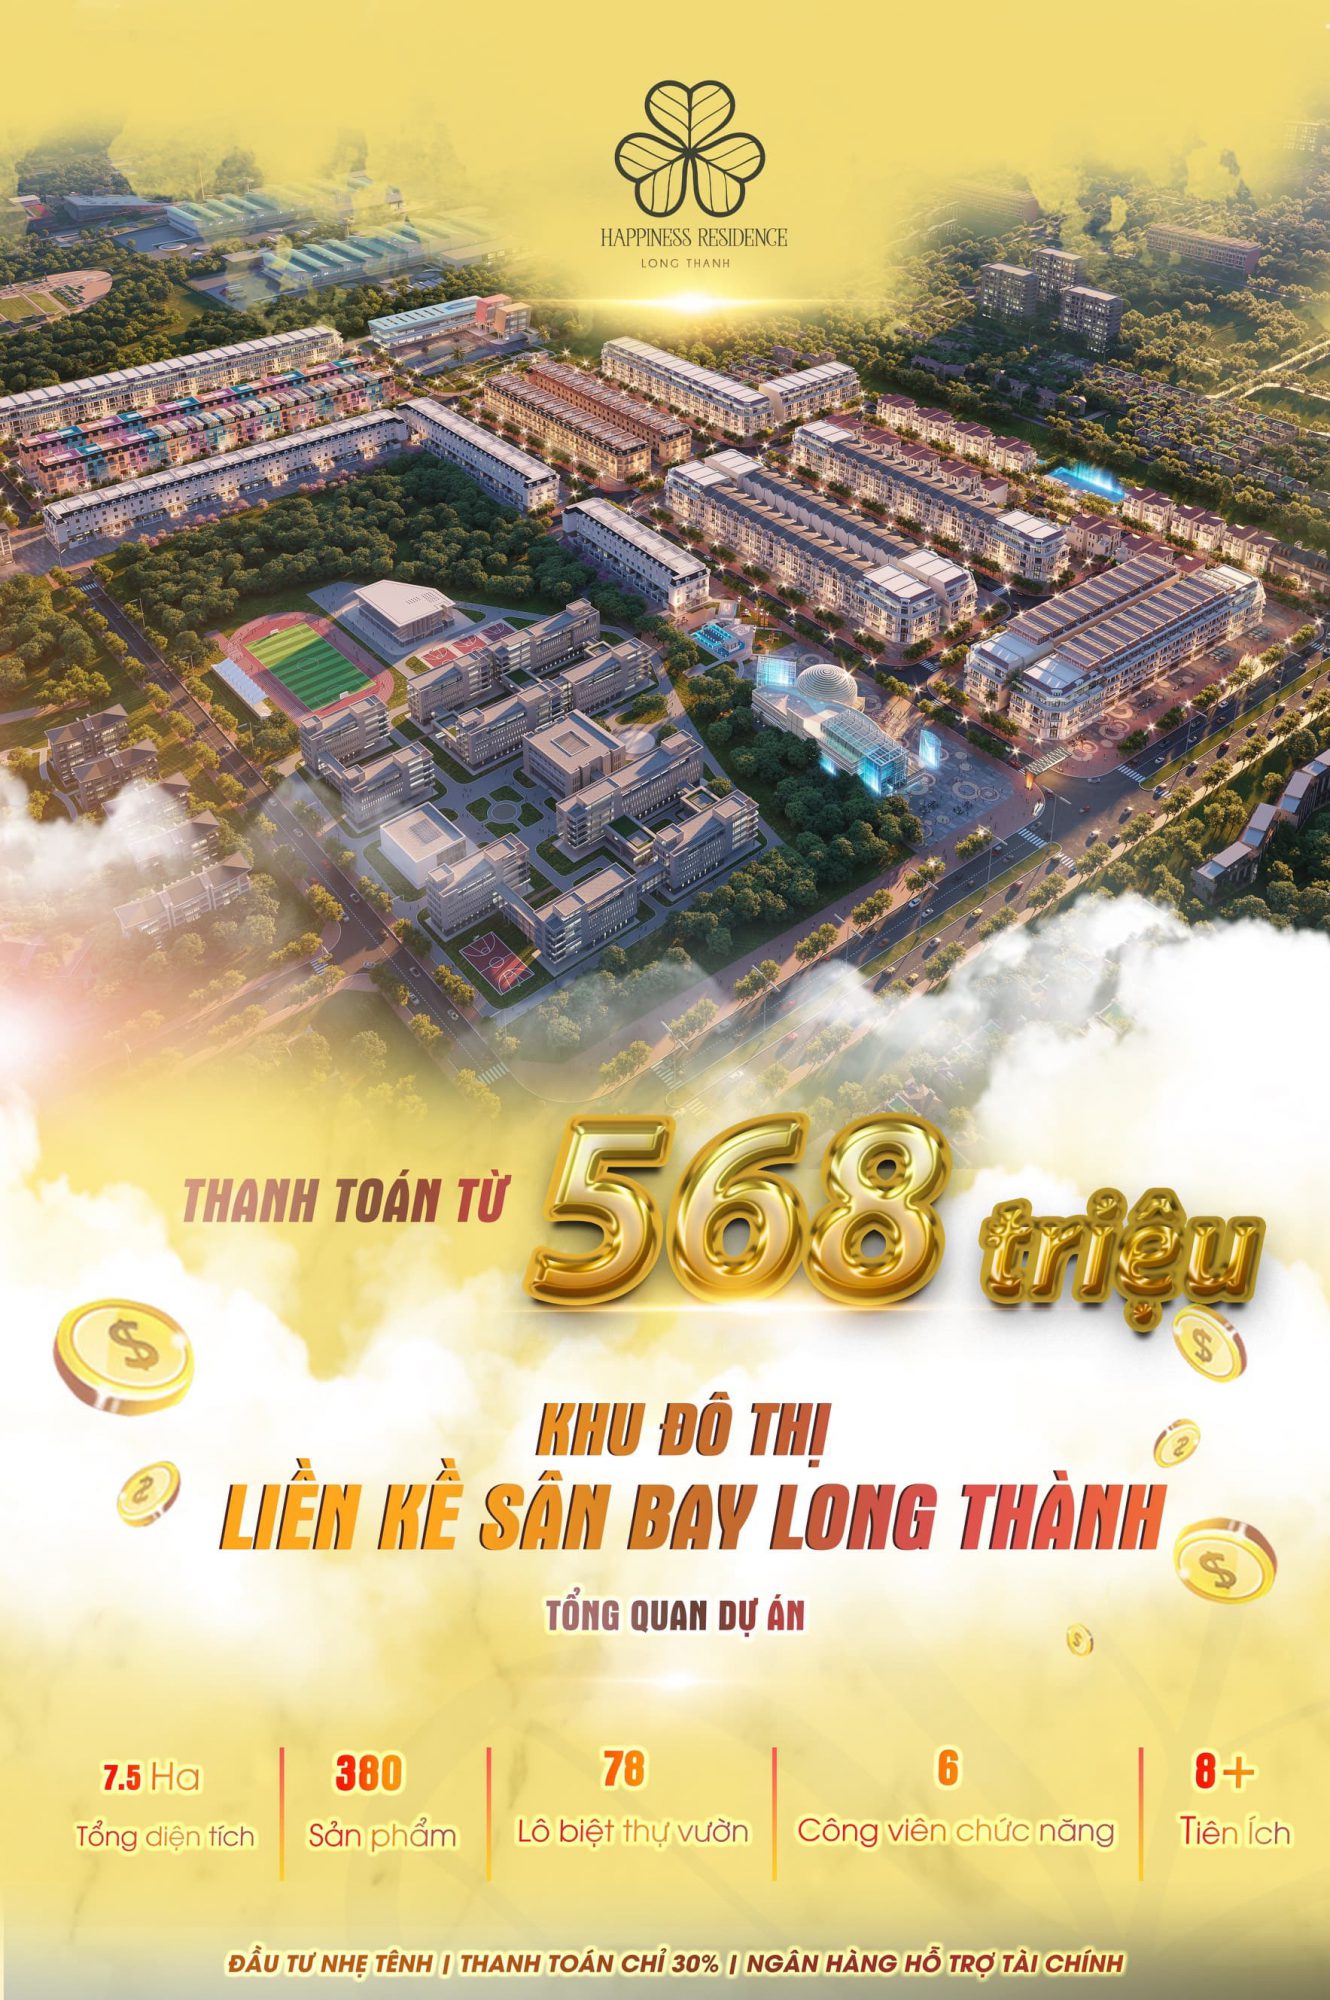 Khu Dan Cu Happiness Residence Long Thanh 2